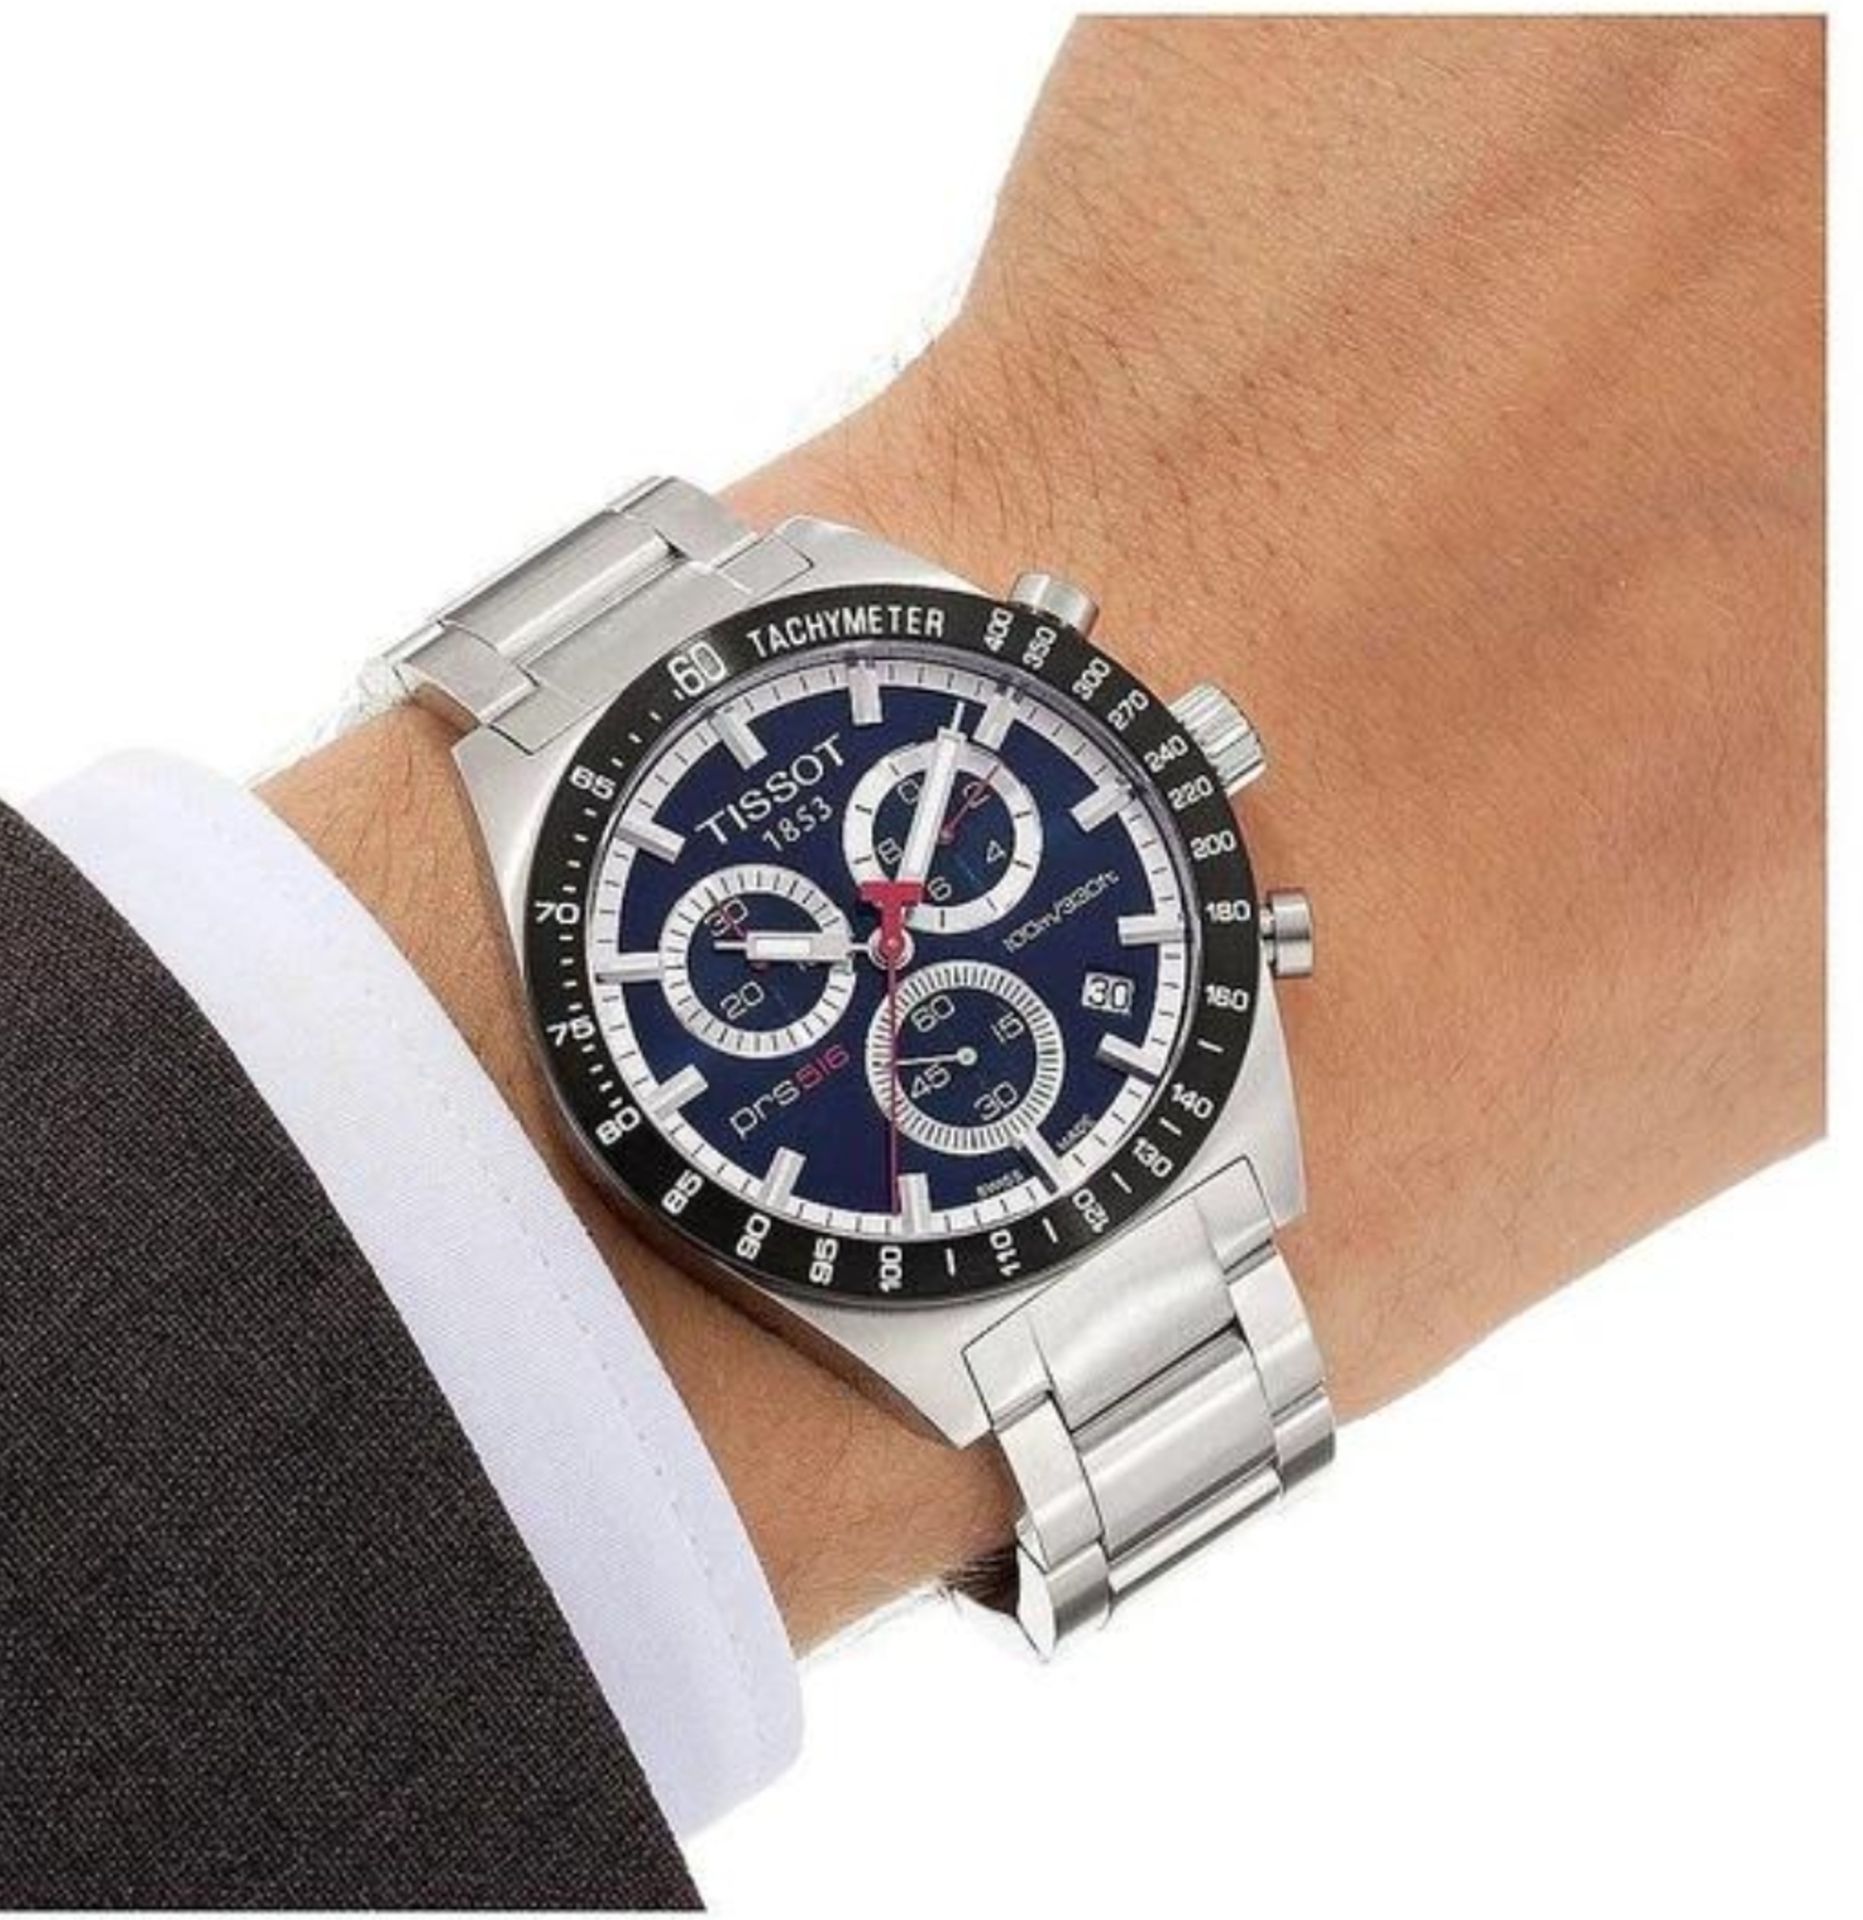 Tissot T044.417.21.041.00 Men's Chronograph Watch - Image 2 of 6